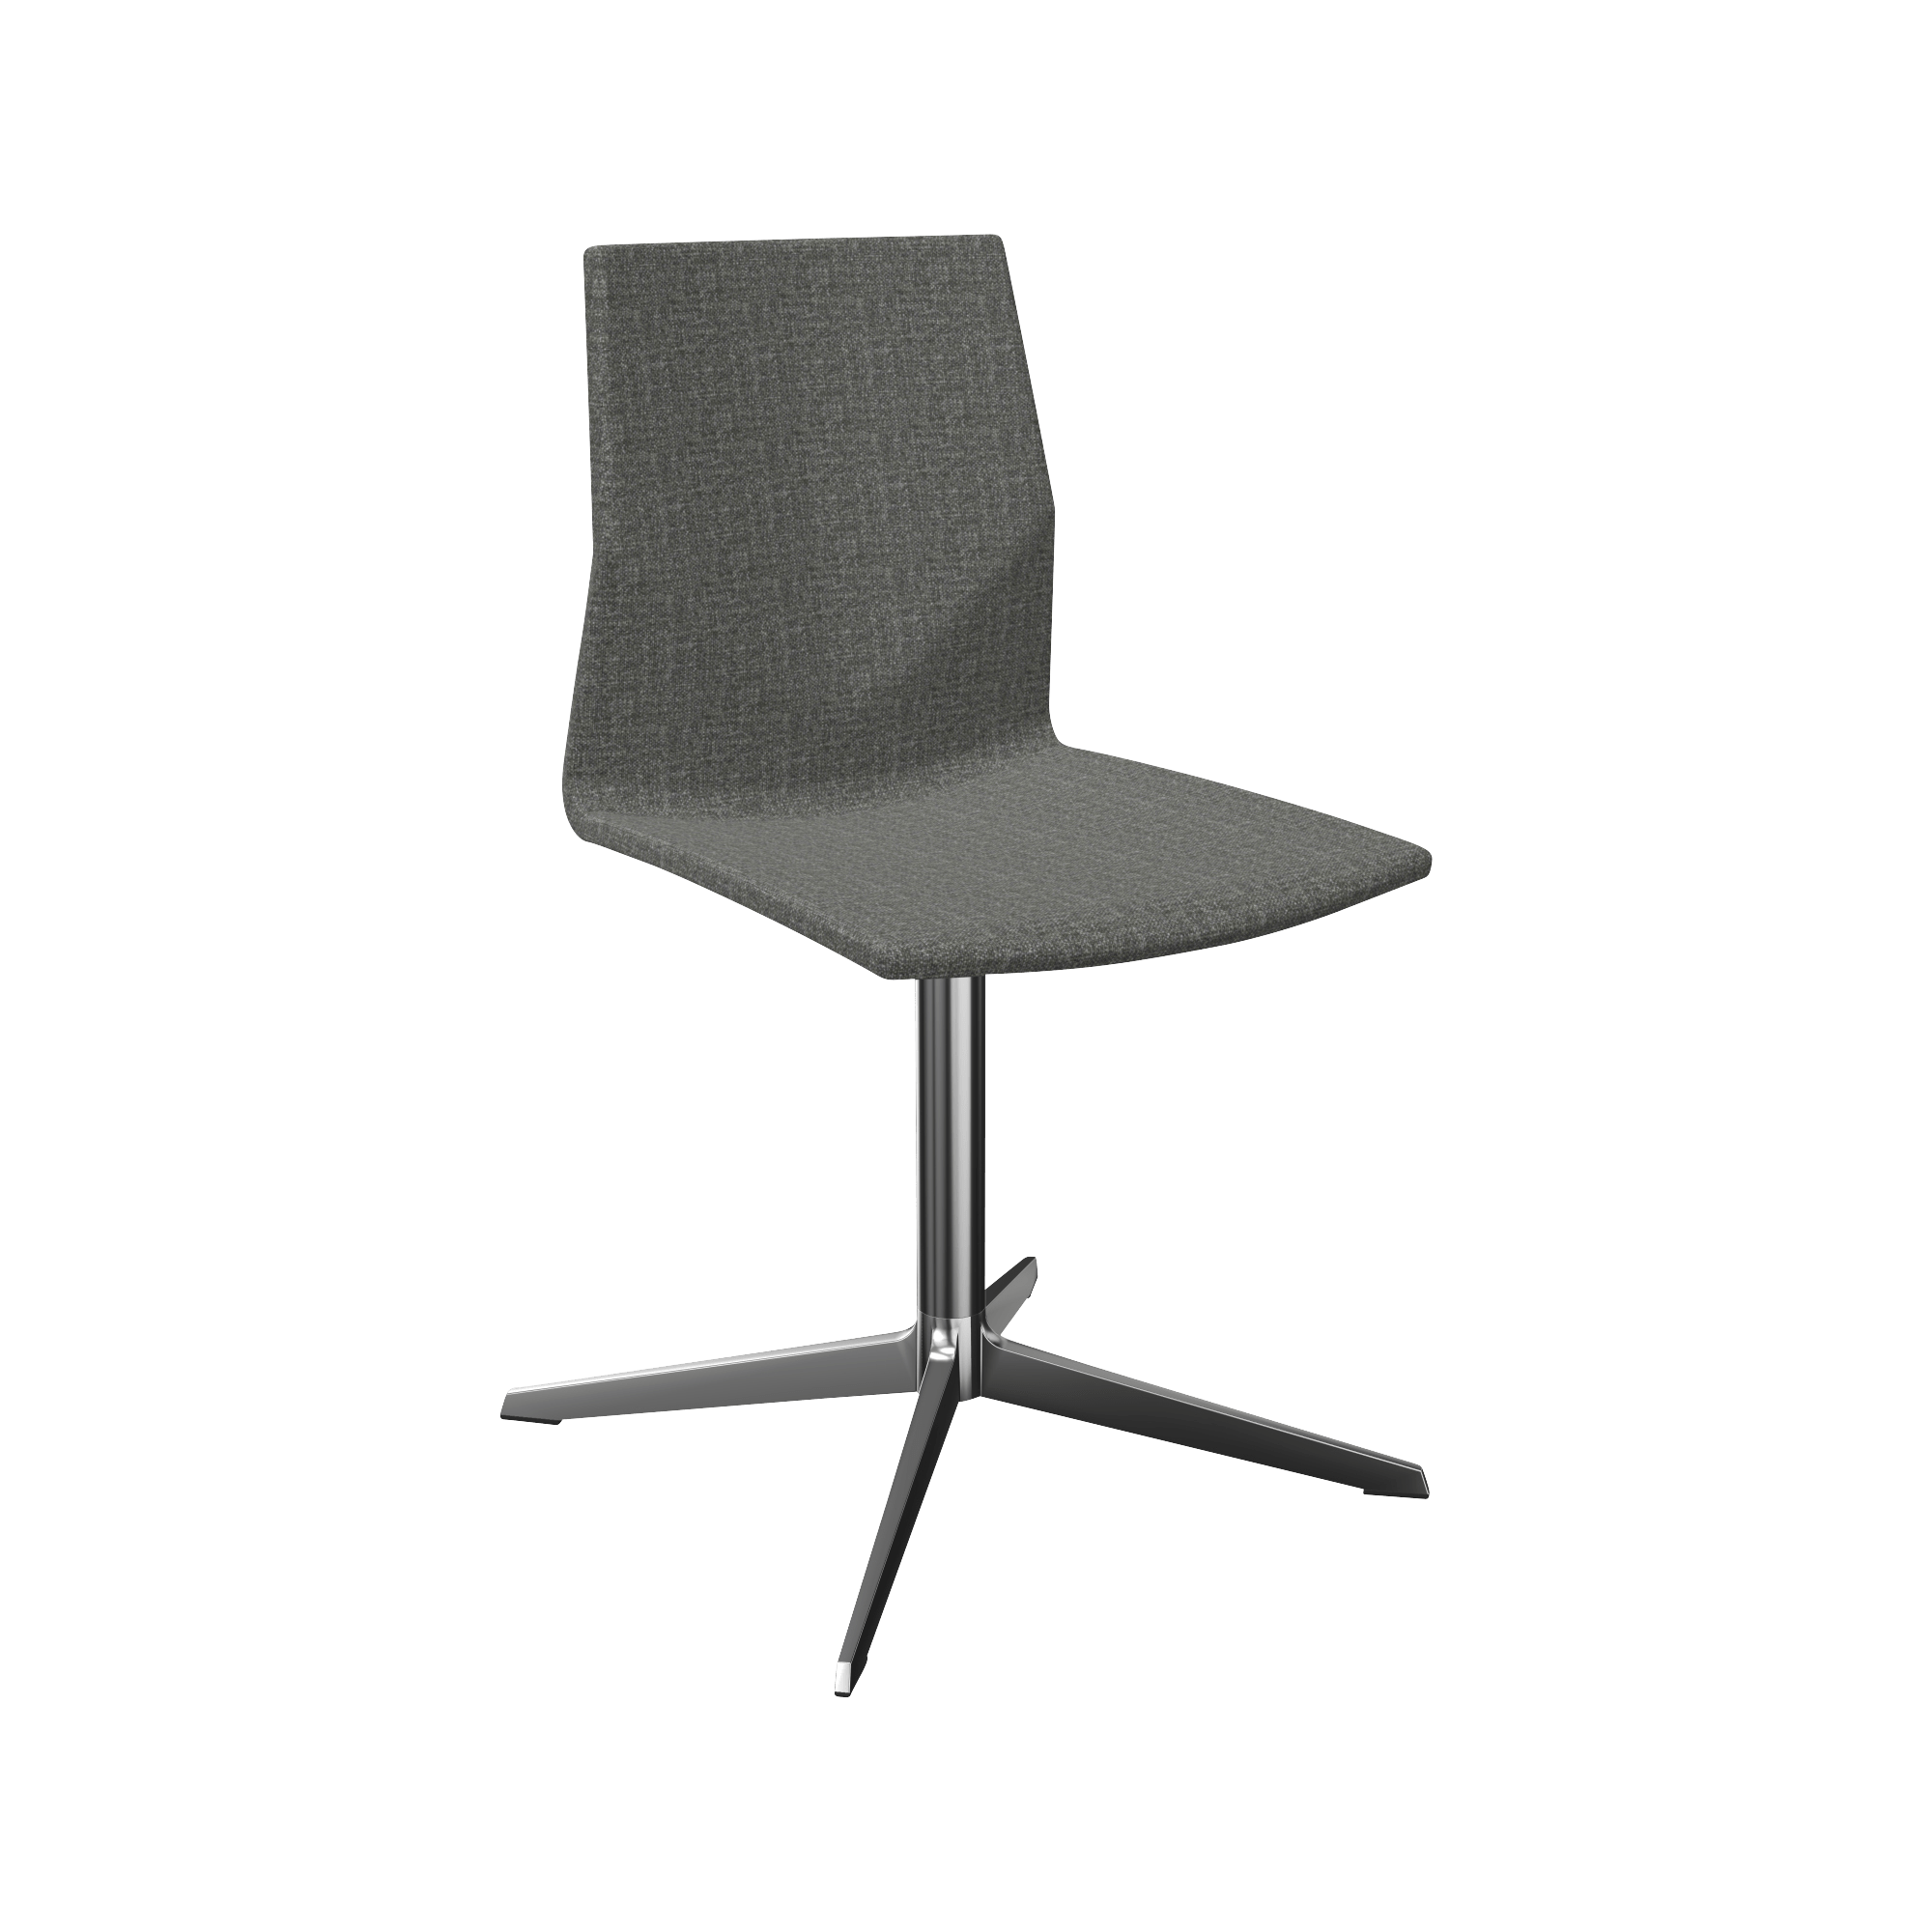 A grey office chair and a chrome pedestal leg